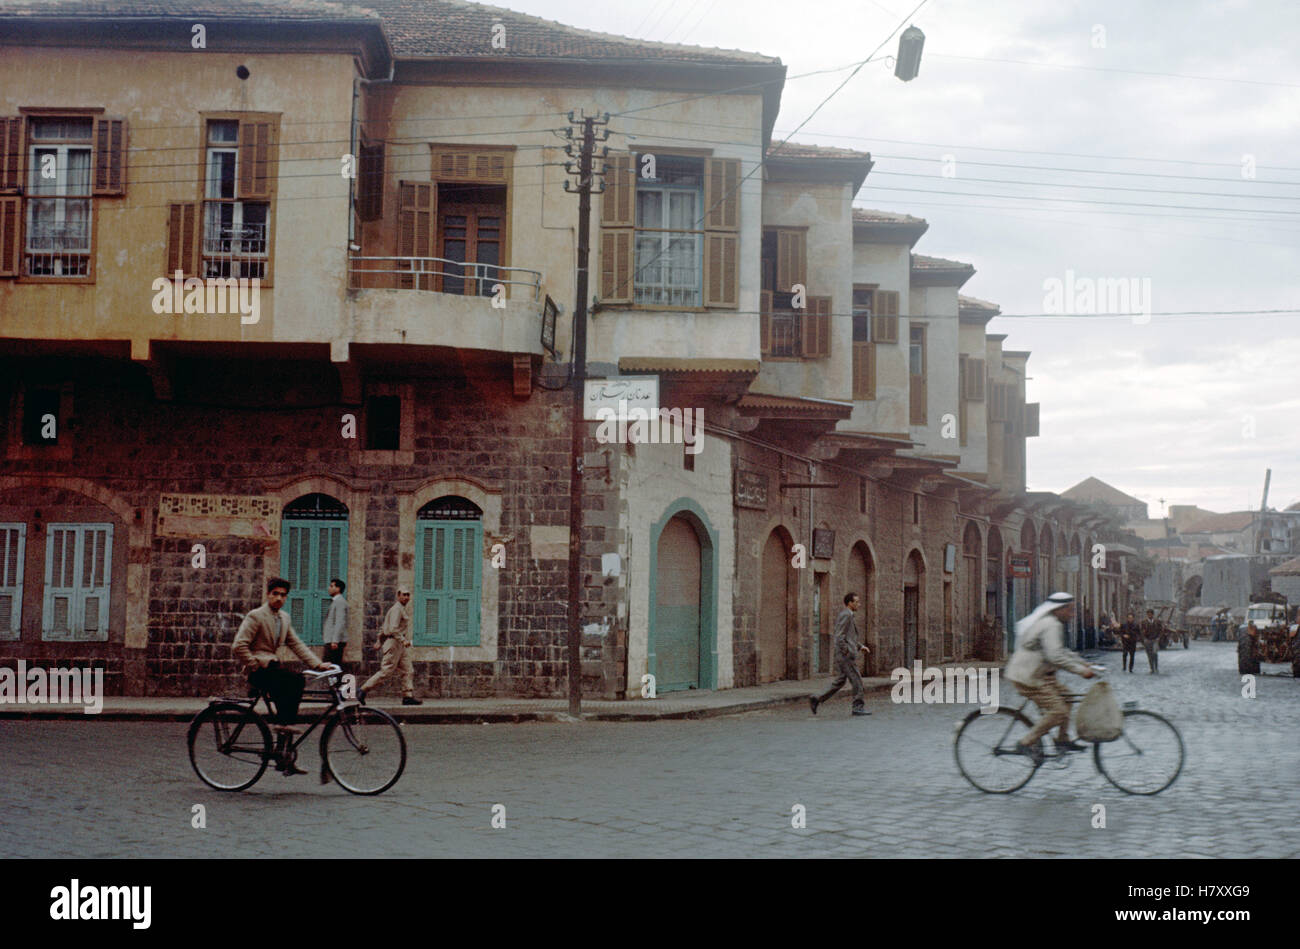 Street scene in the syrian city of Homs, Syria November 1963. | Stock Photo